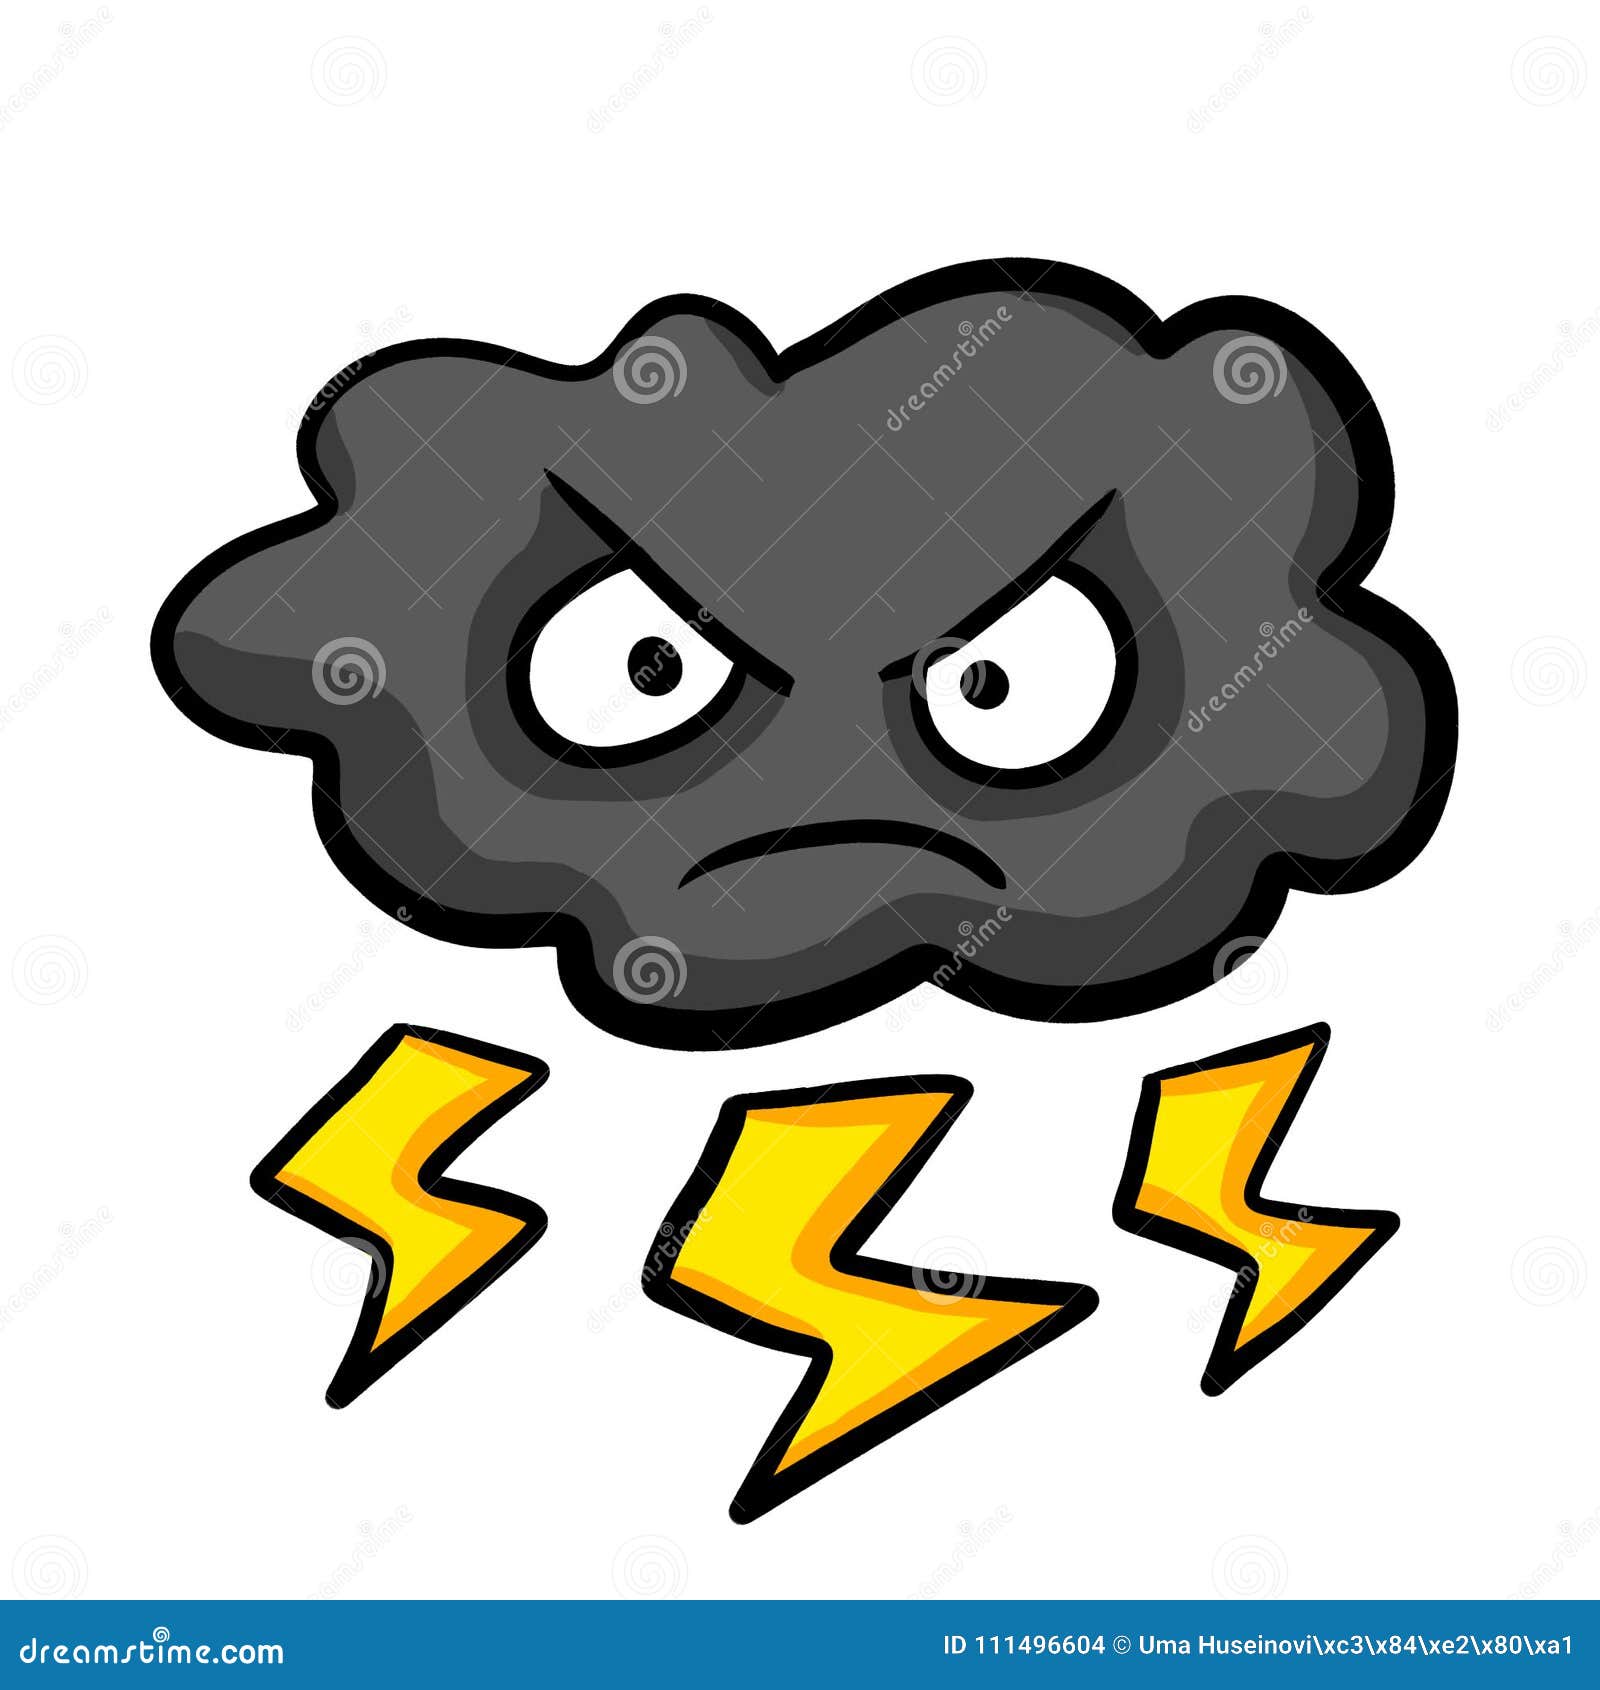 Cartoon Angry Thunder Cloud Stock Illustration - Illustration of cute ...